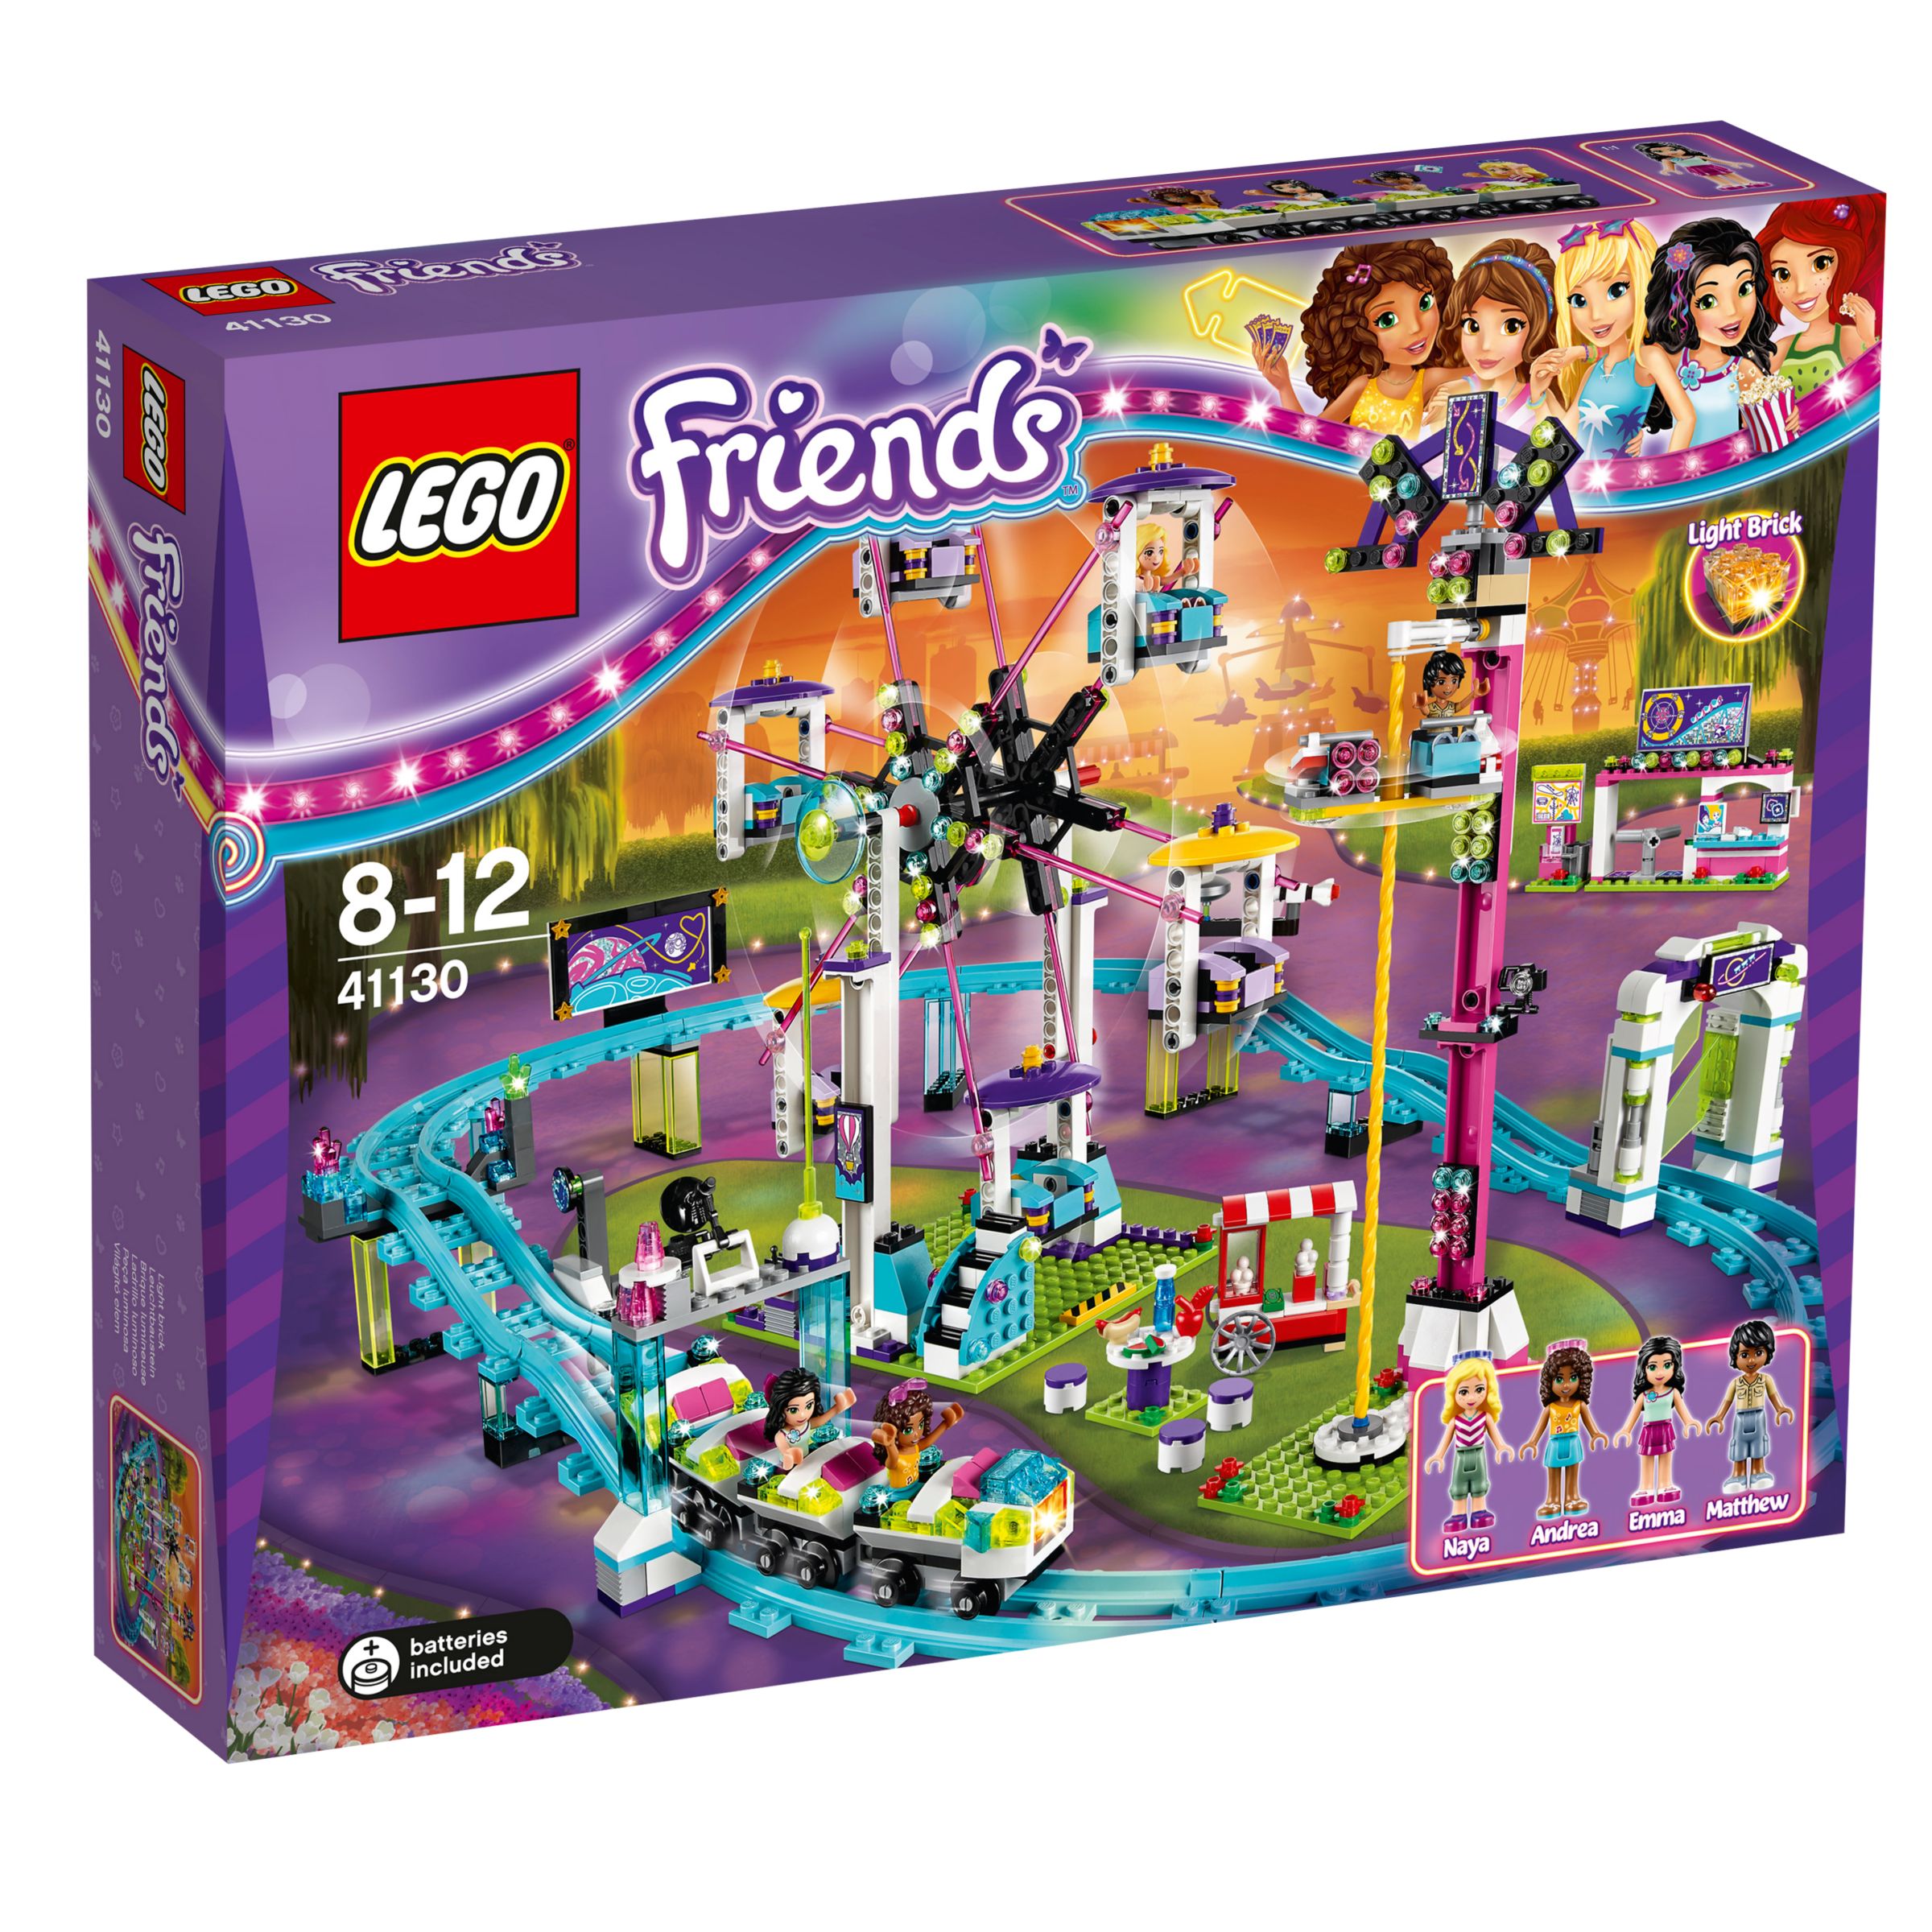 LEGO Friends 41130 Roller Coaster